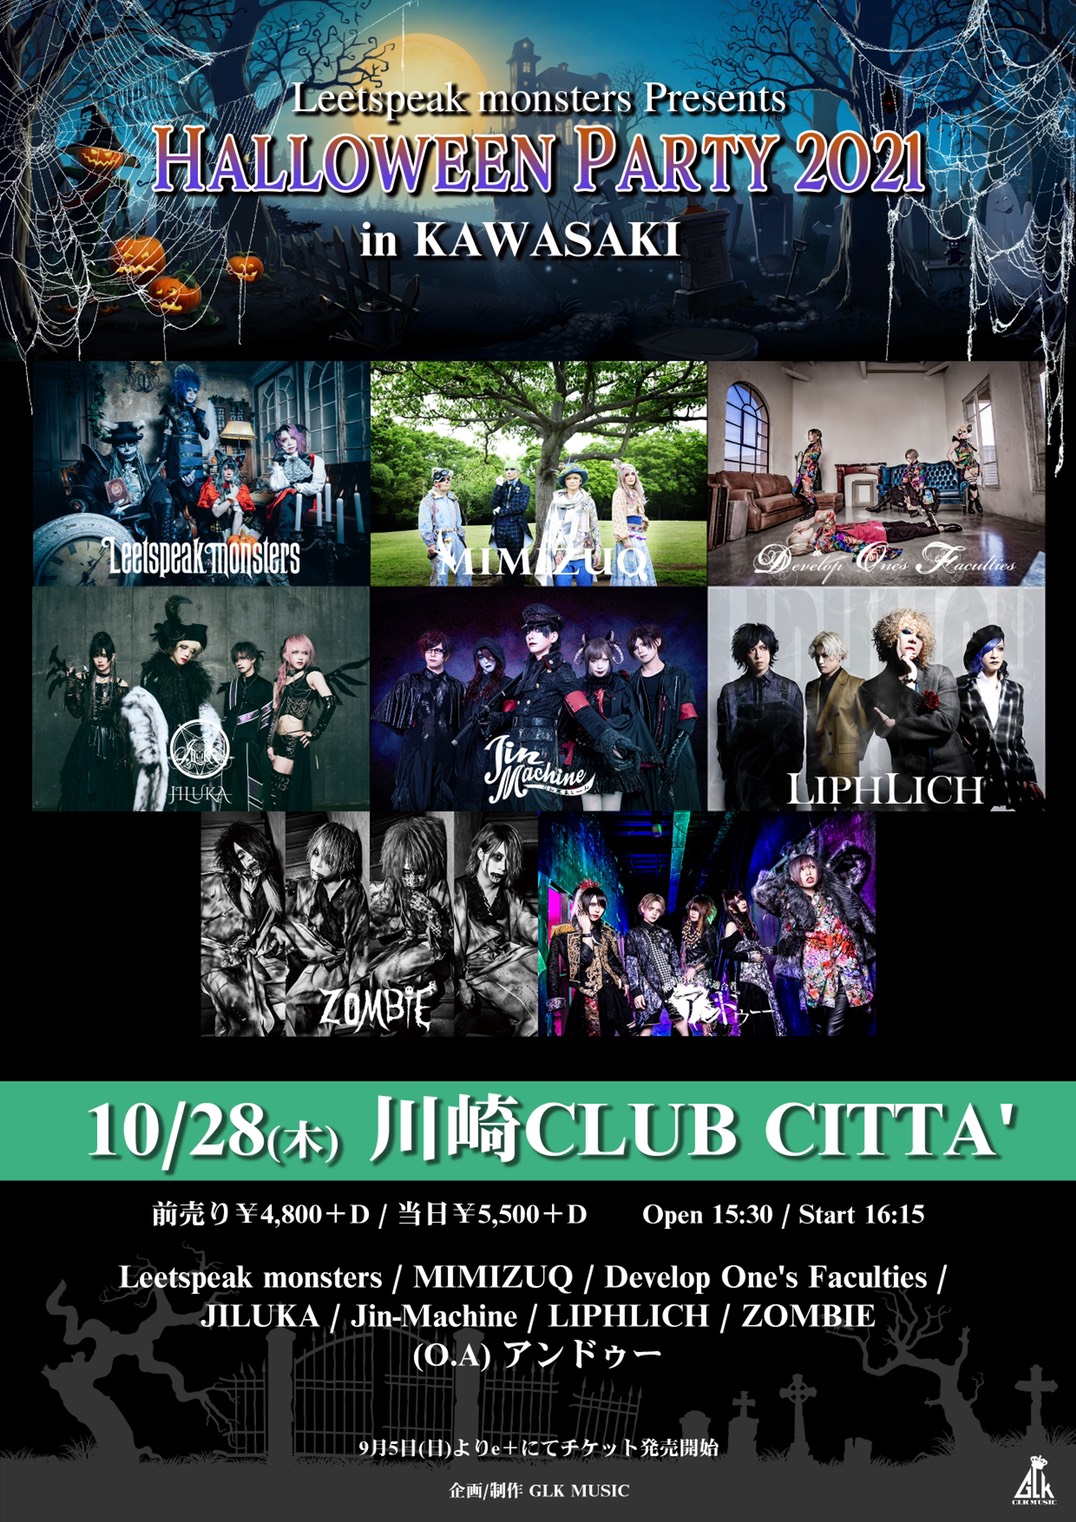 Leetspeak monsters Presents Halloween Party 2021 in Kawasaki